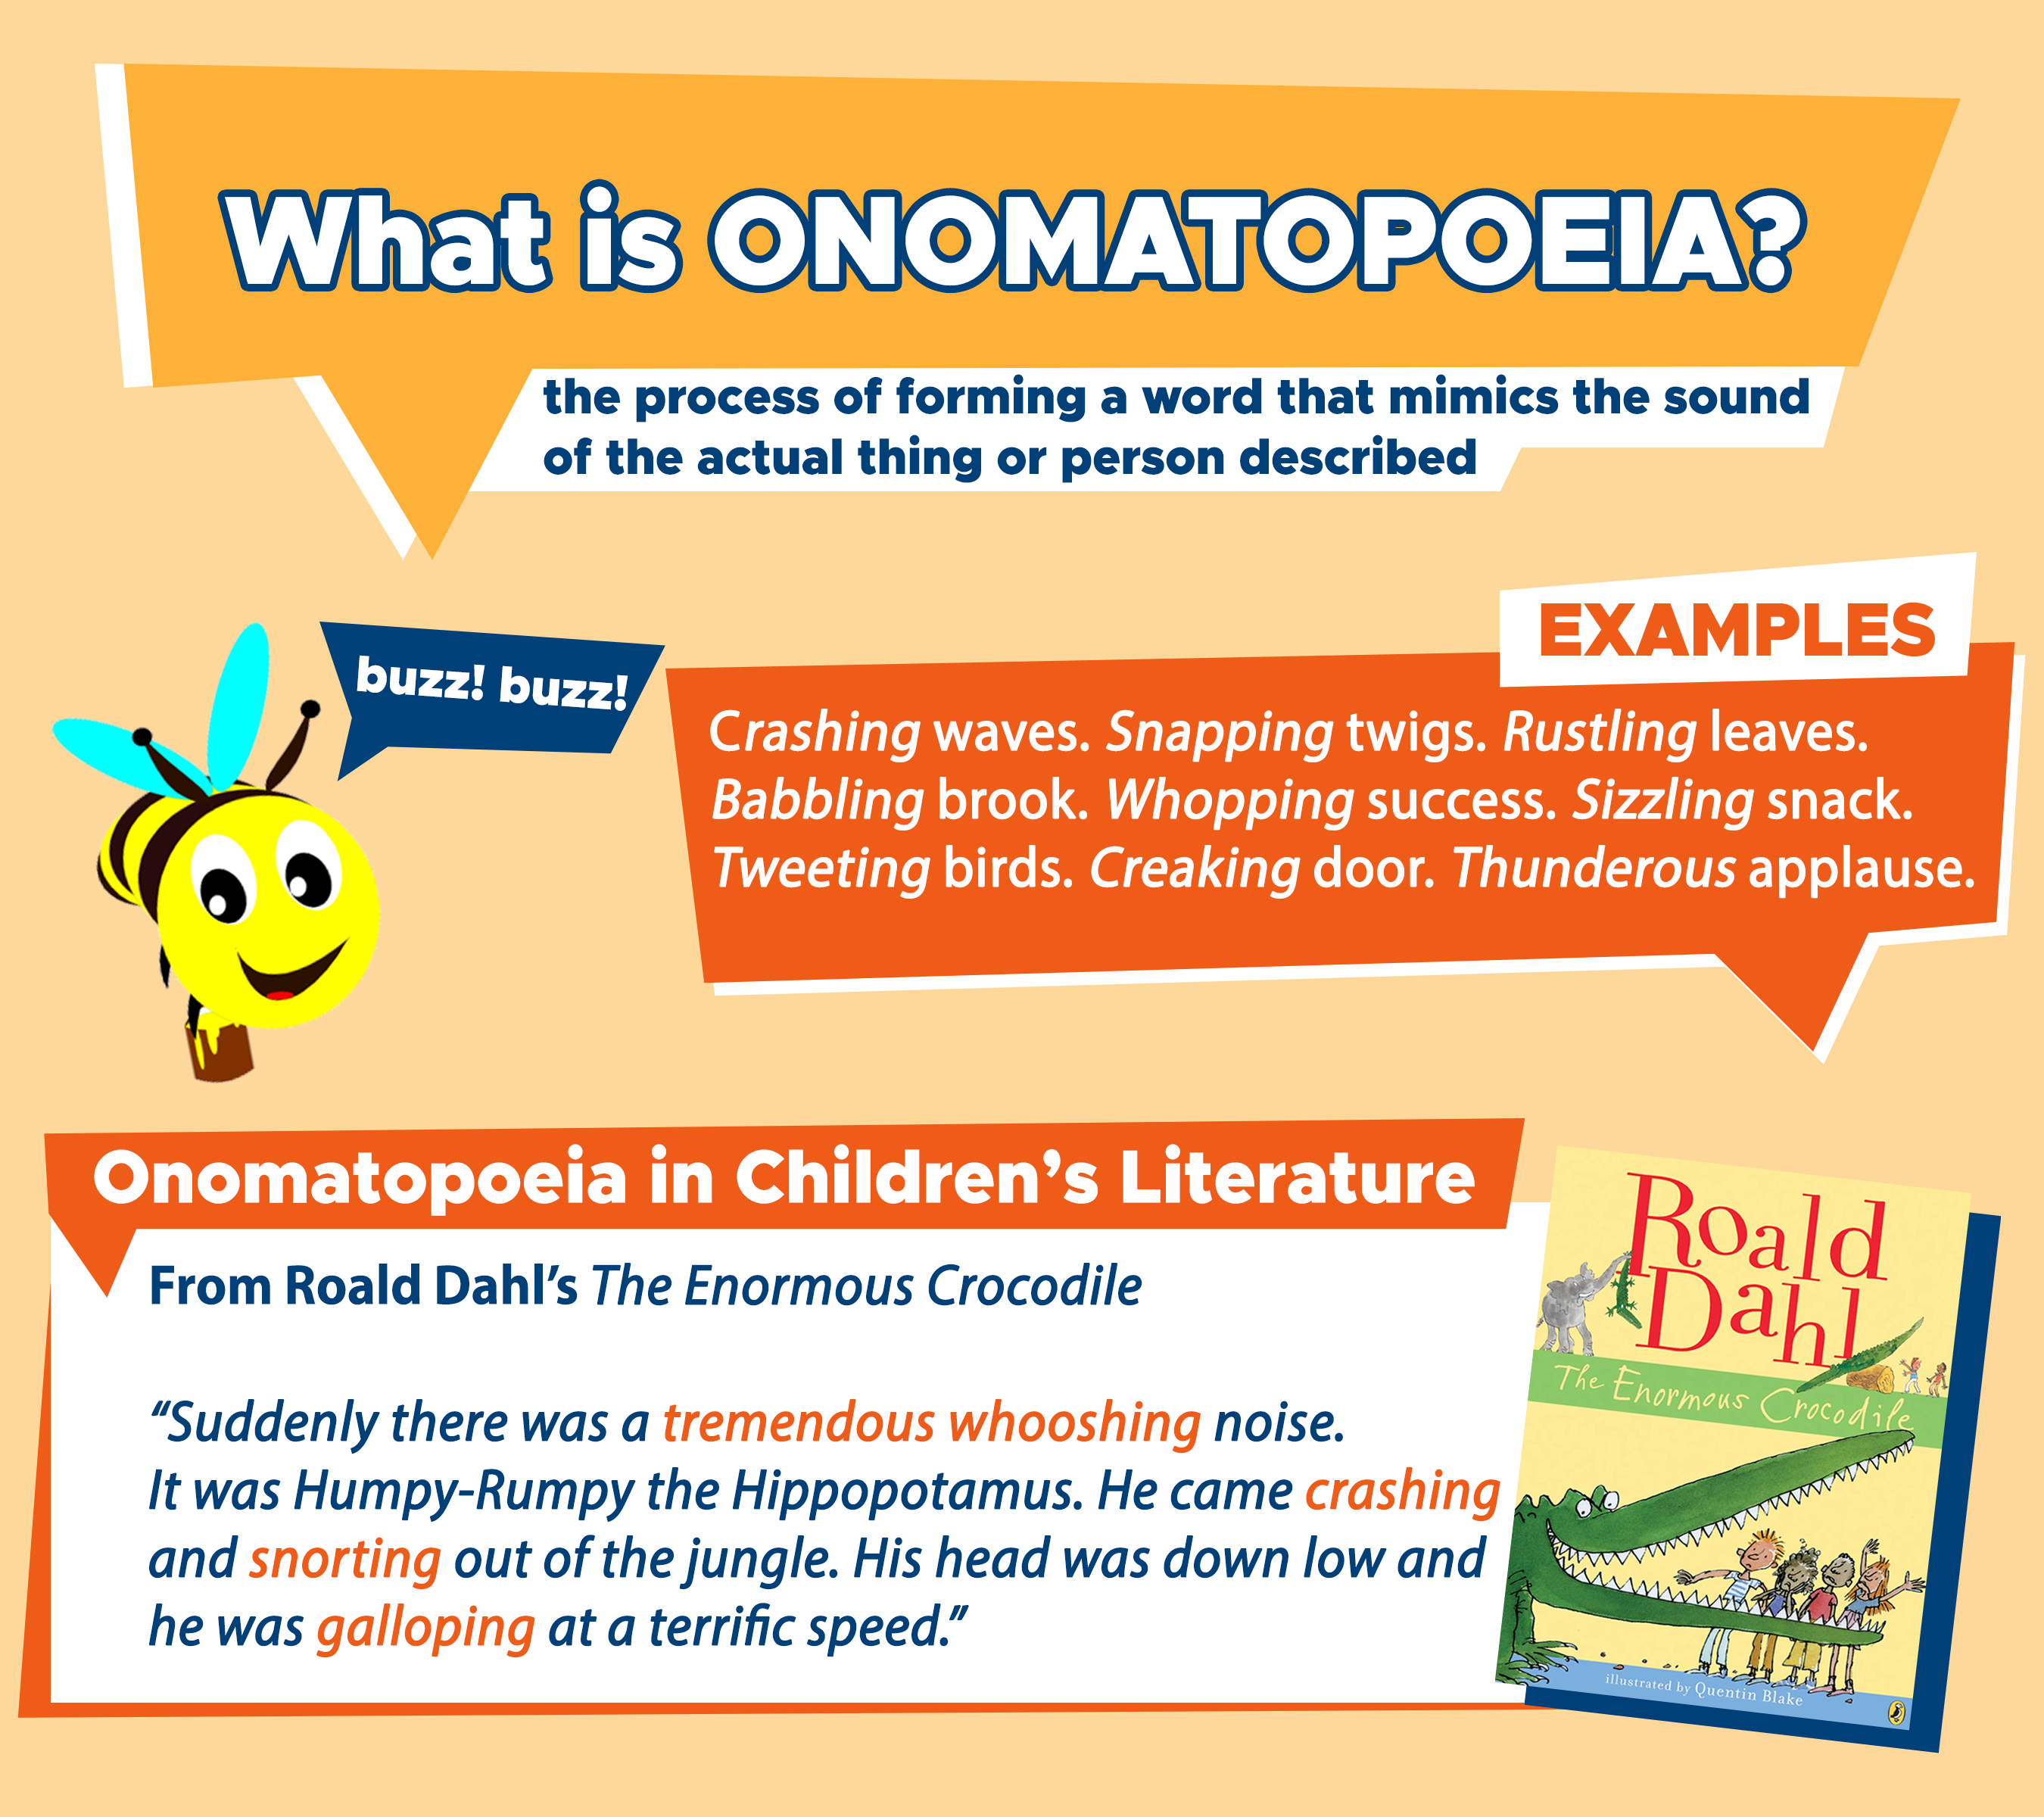 Onomatopoeia meaning